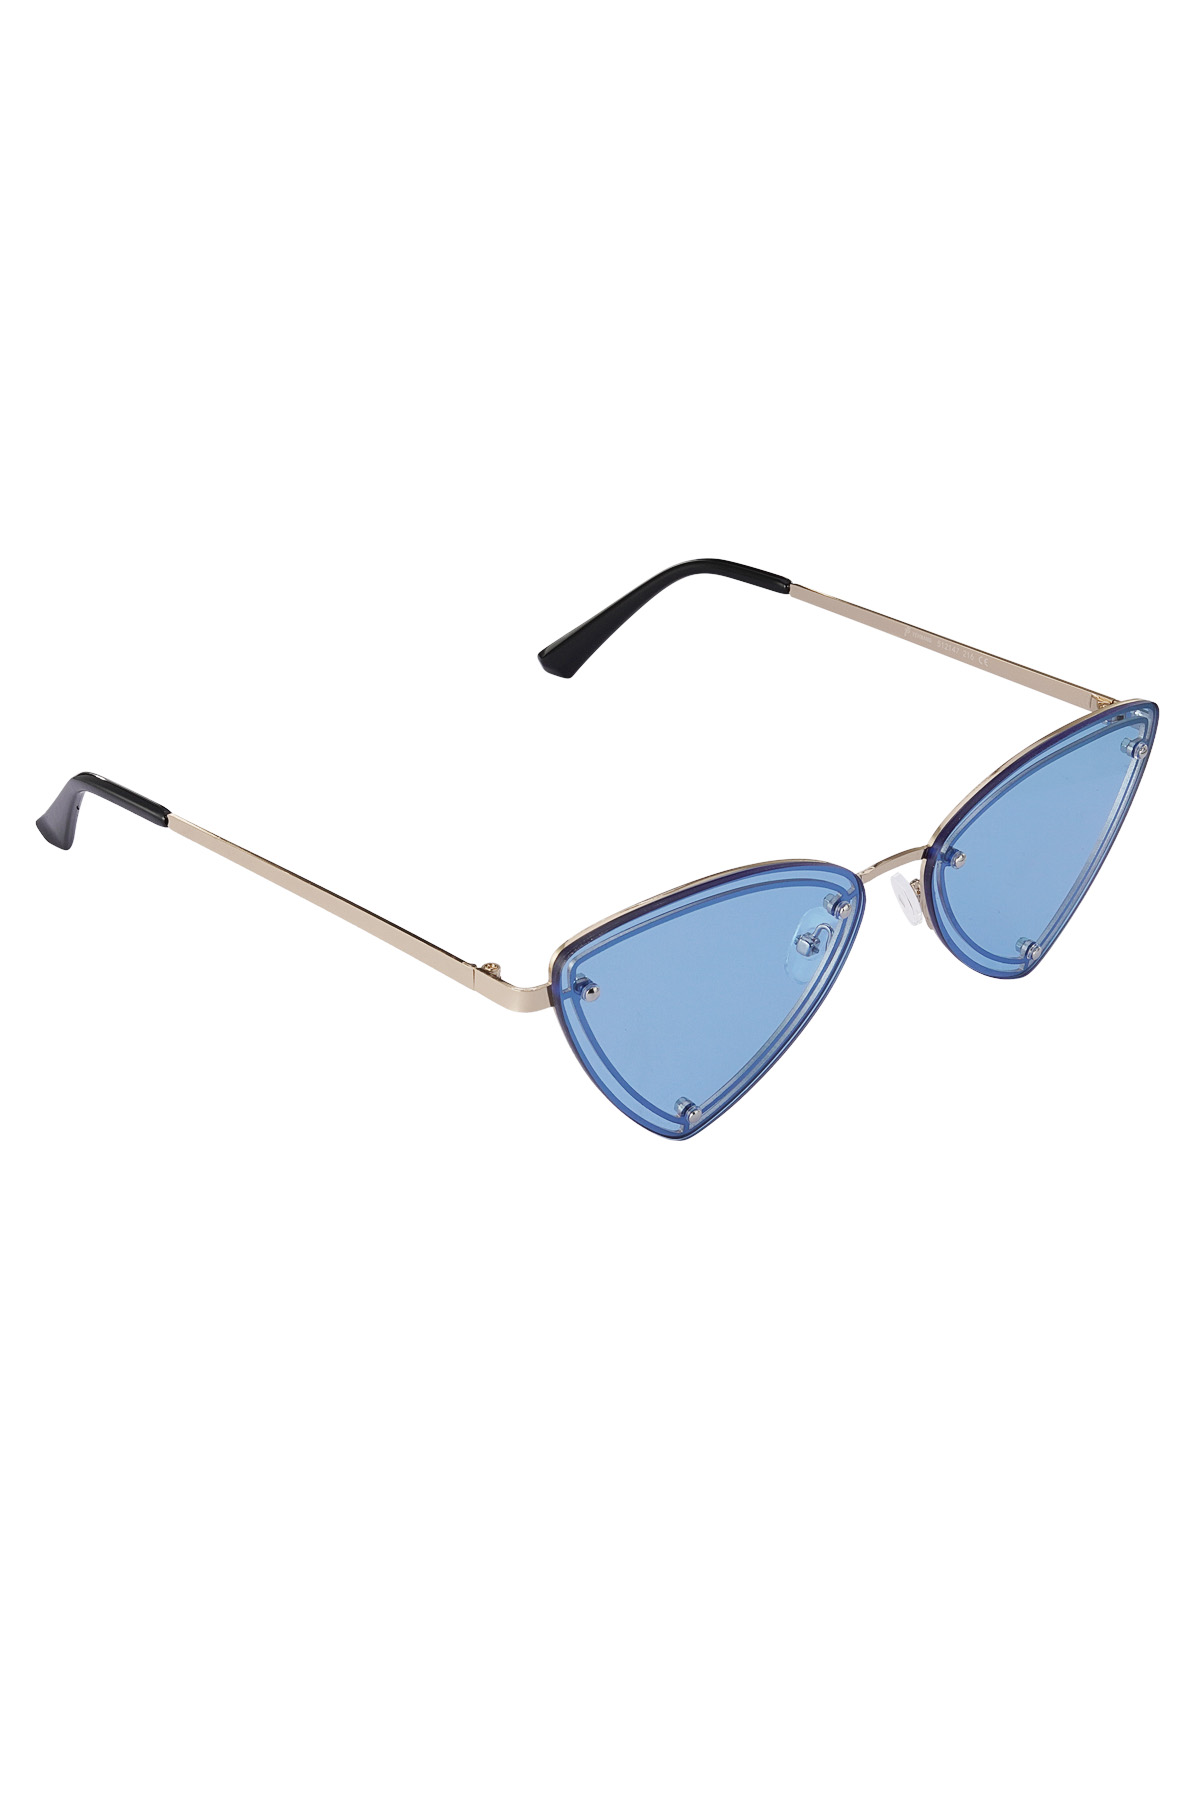 Retro party sunglasses - blue gold h5 